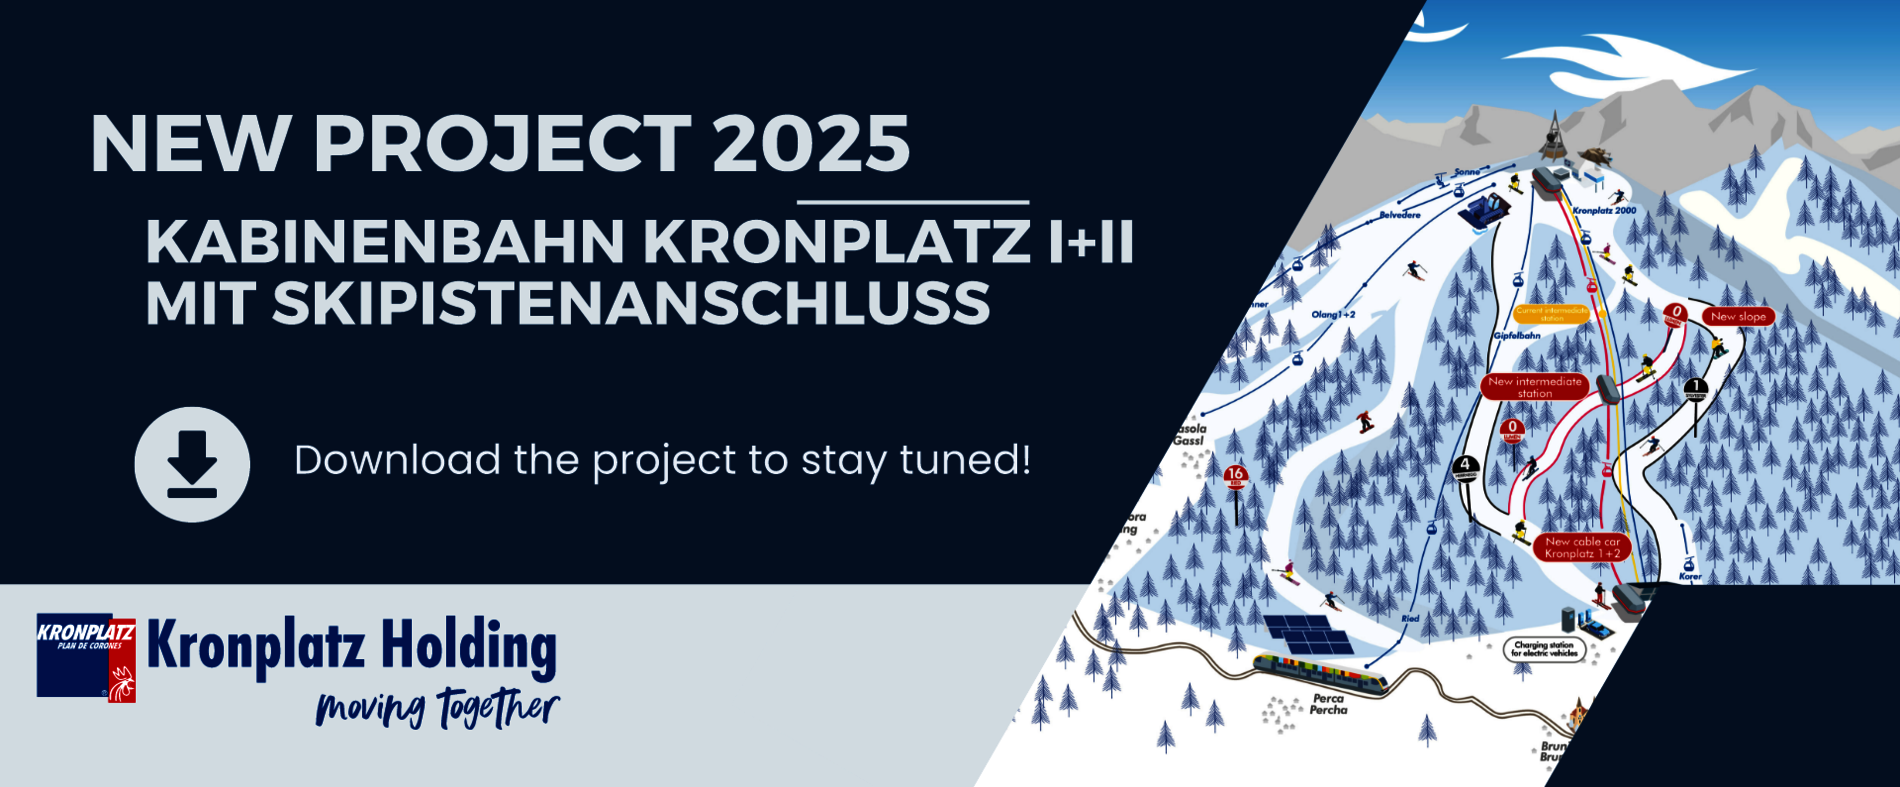 New Projekt 2025